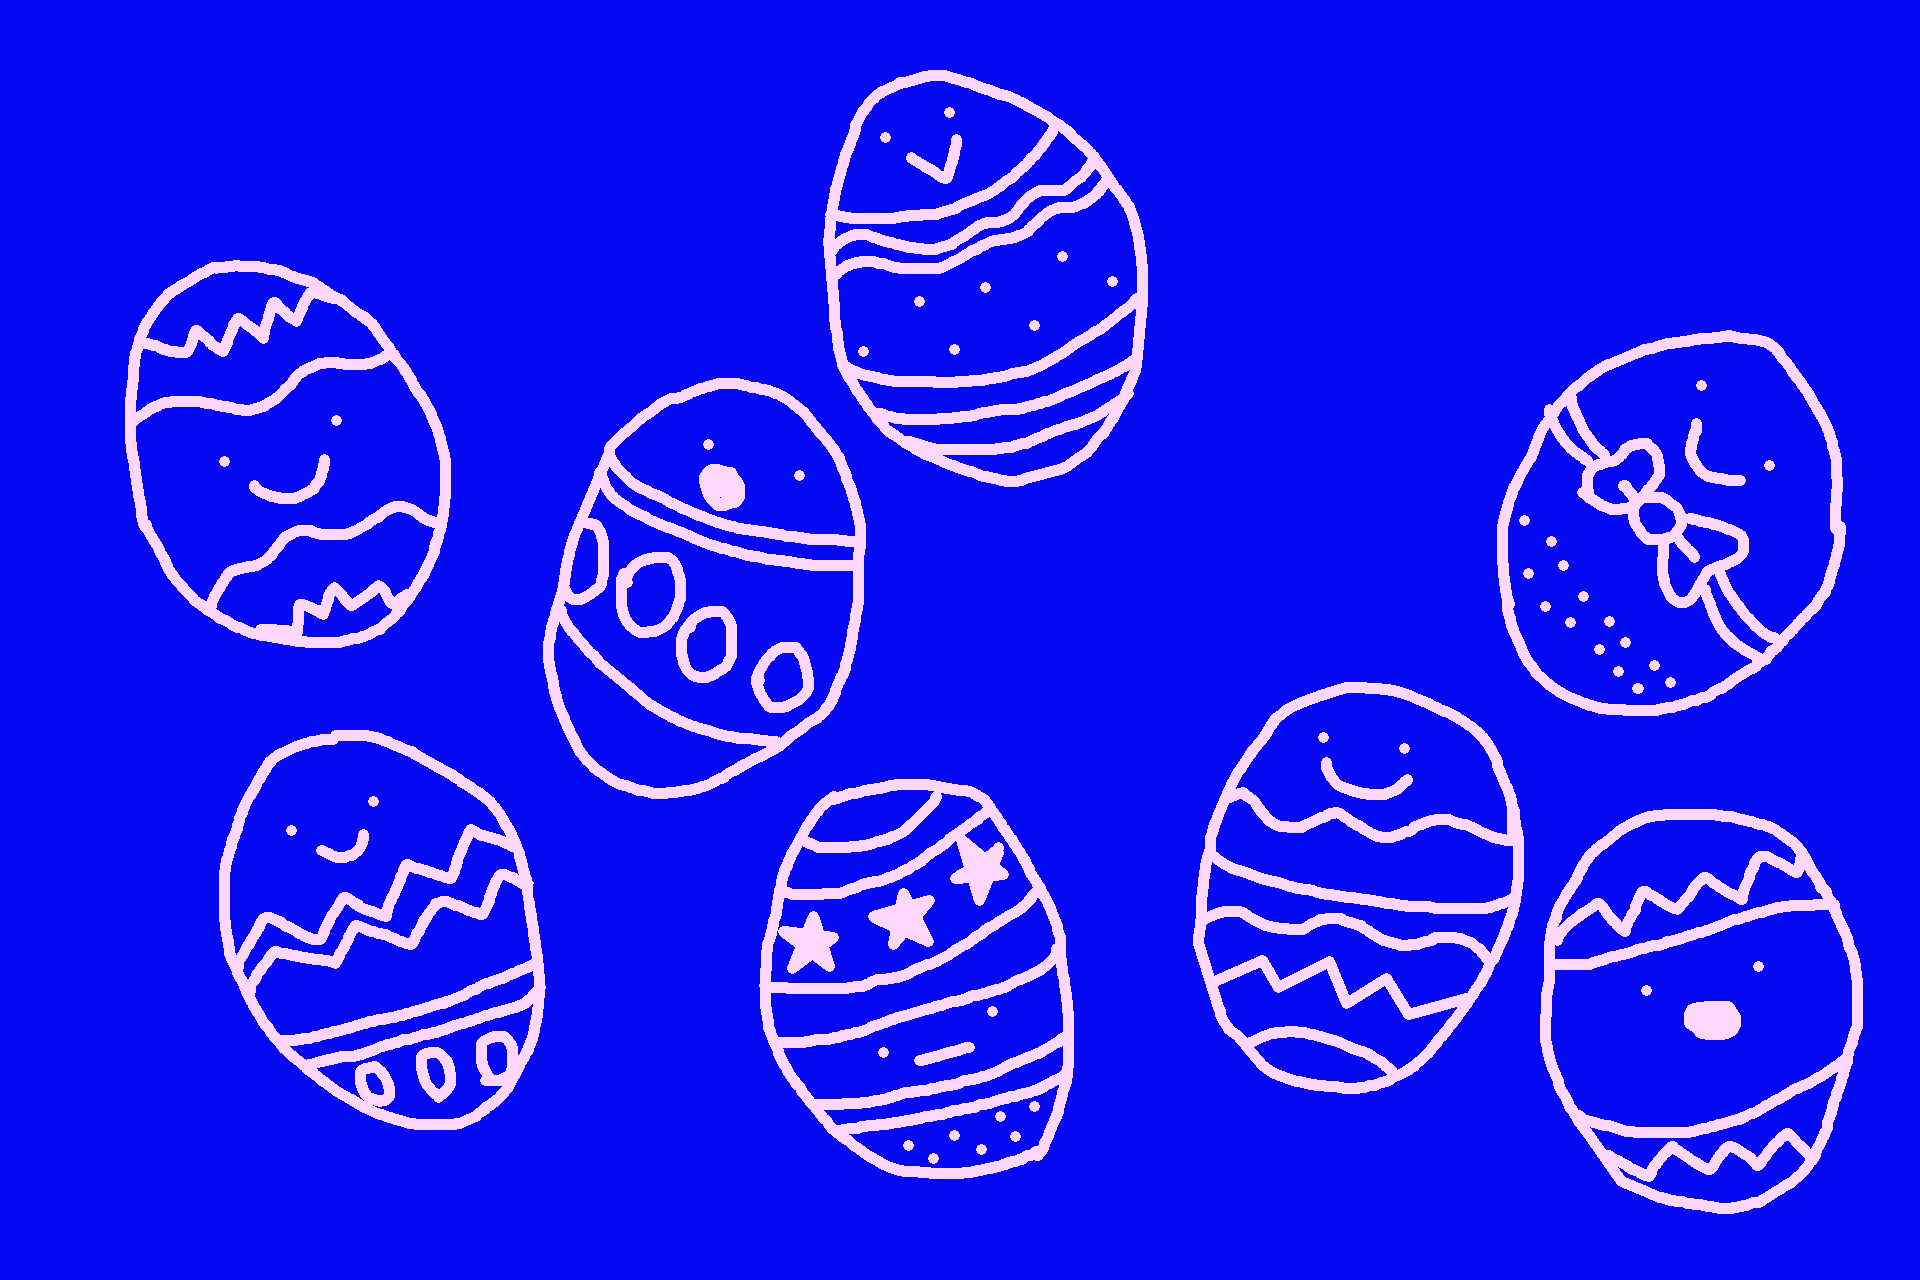 dessin naïf d'œufs décorés, sur fond bleu